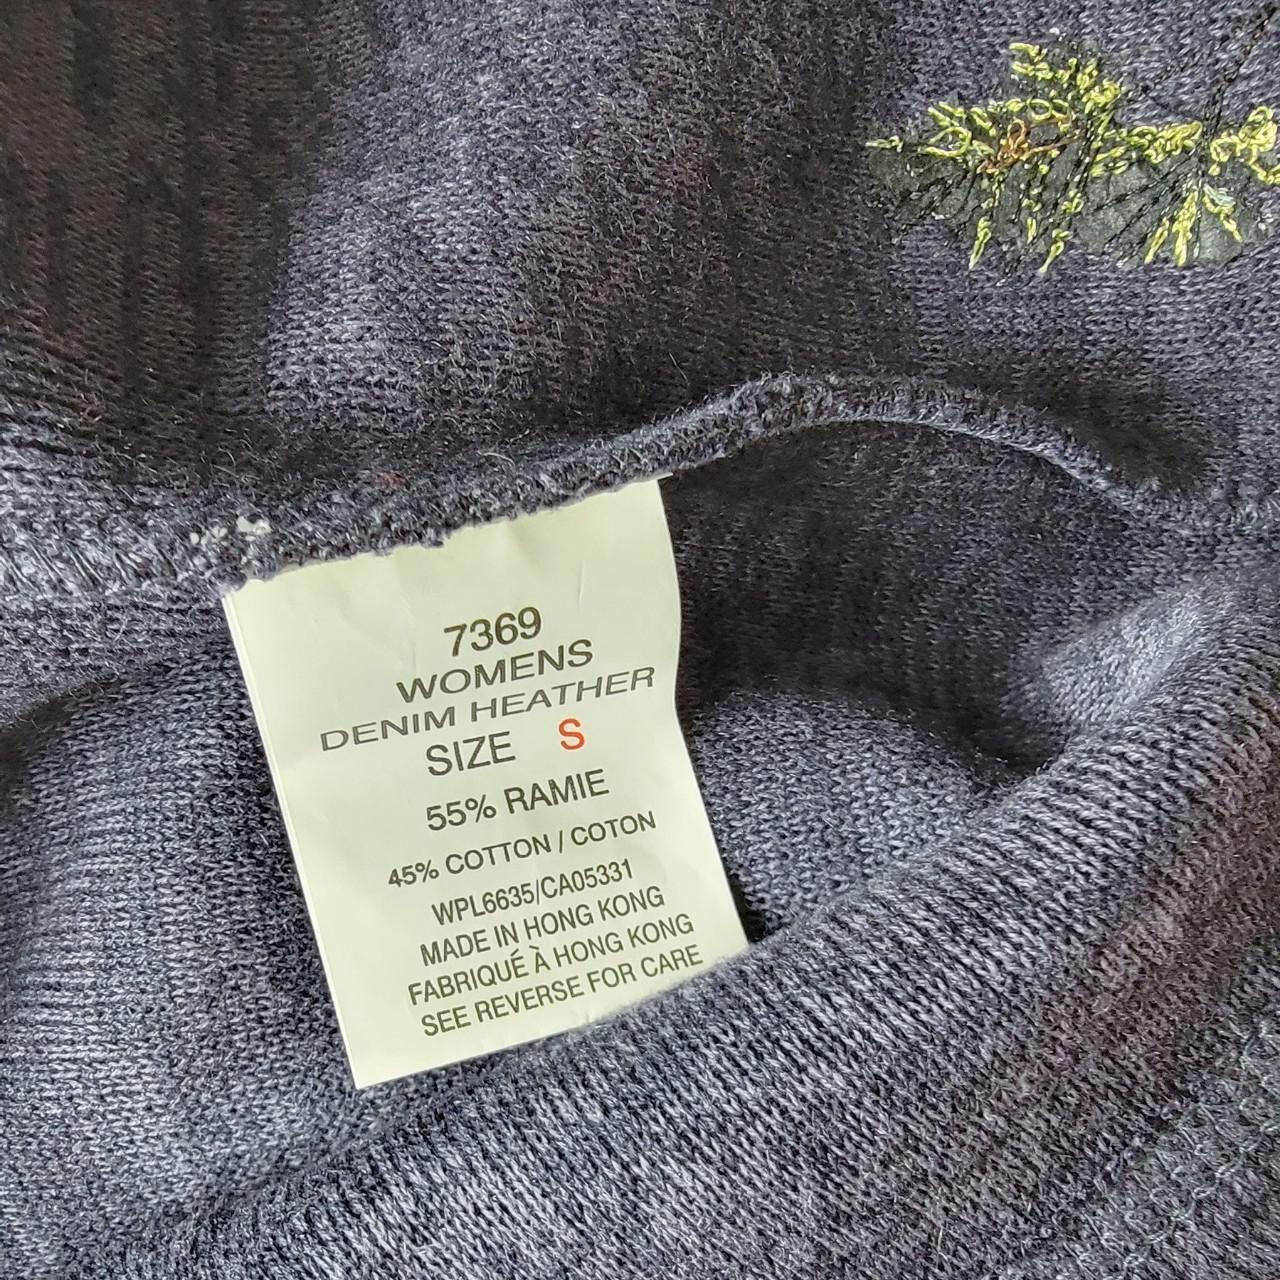 Product Image 4 - Dark Blue Grey Vest

Winter motif